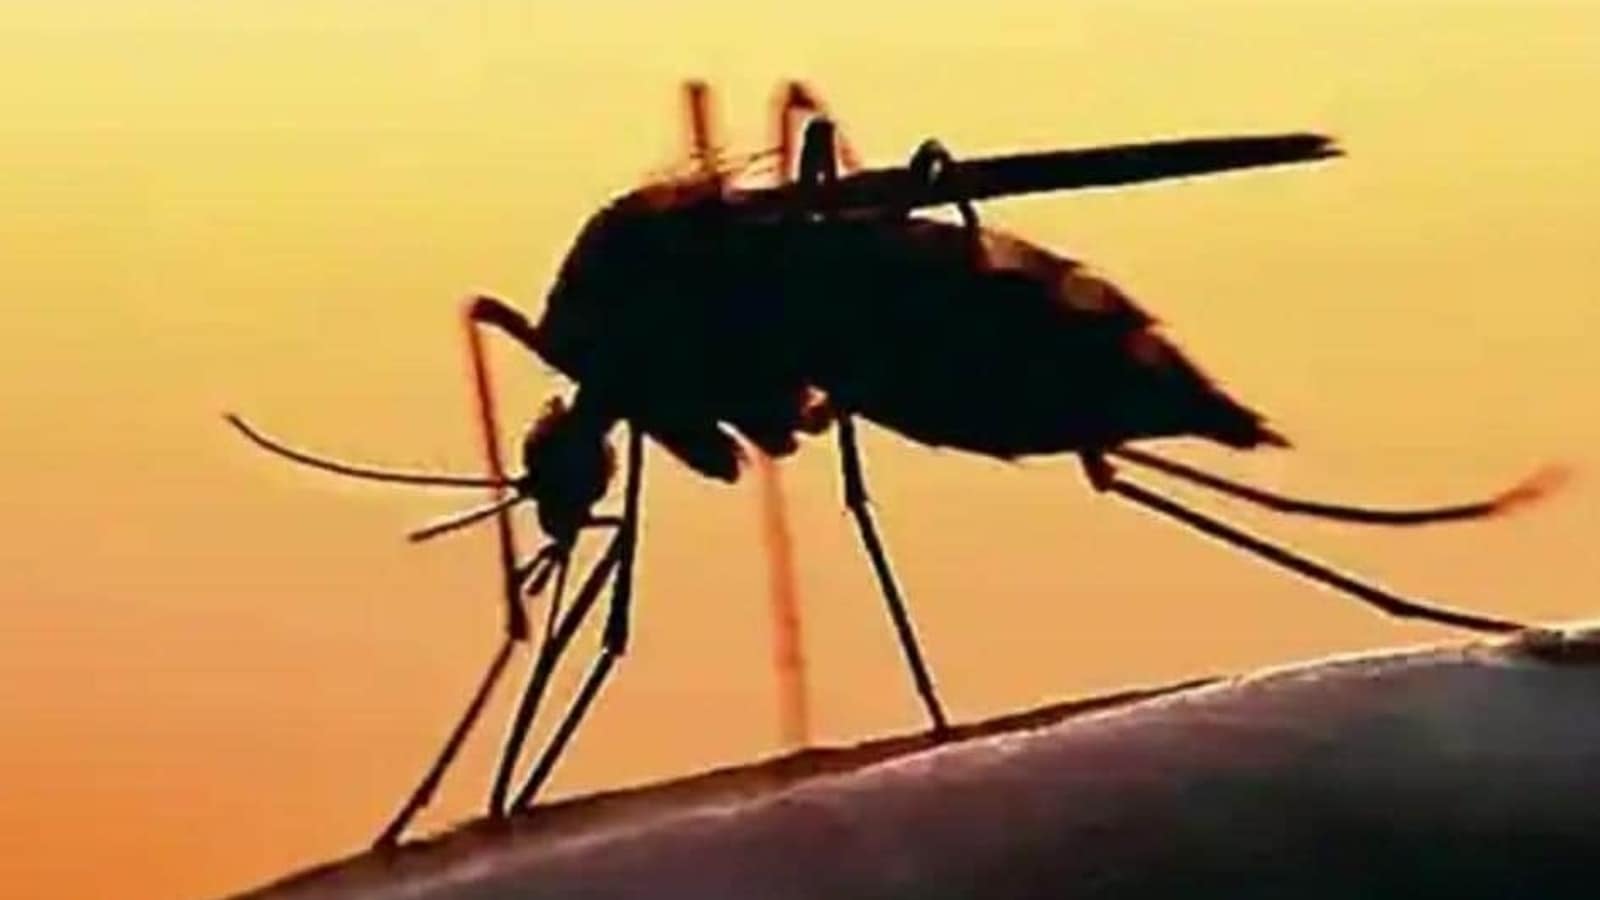 Dengue situation under complete control: UP deputy CM